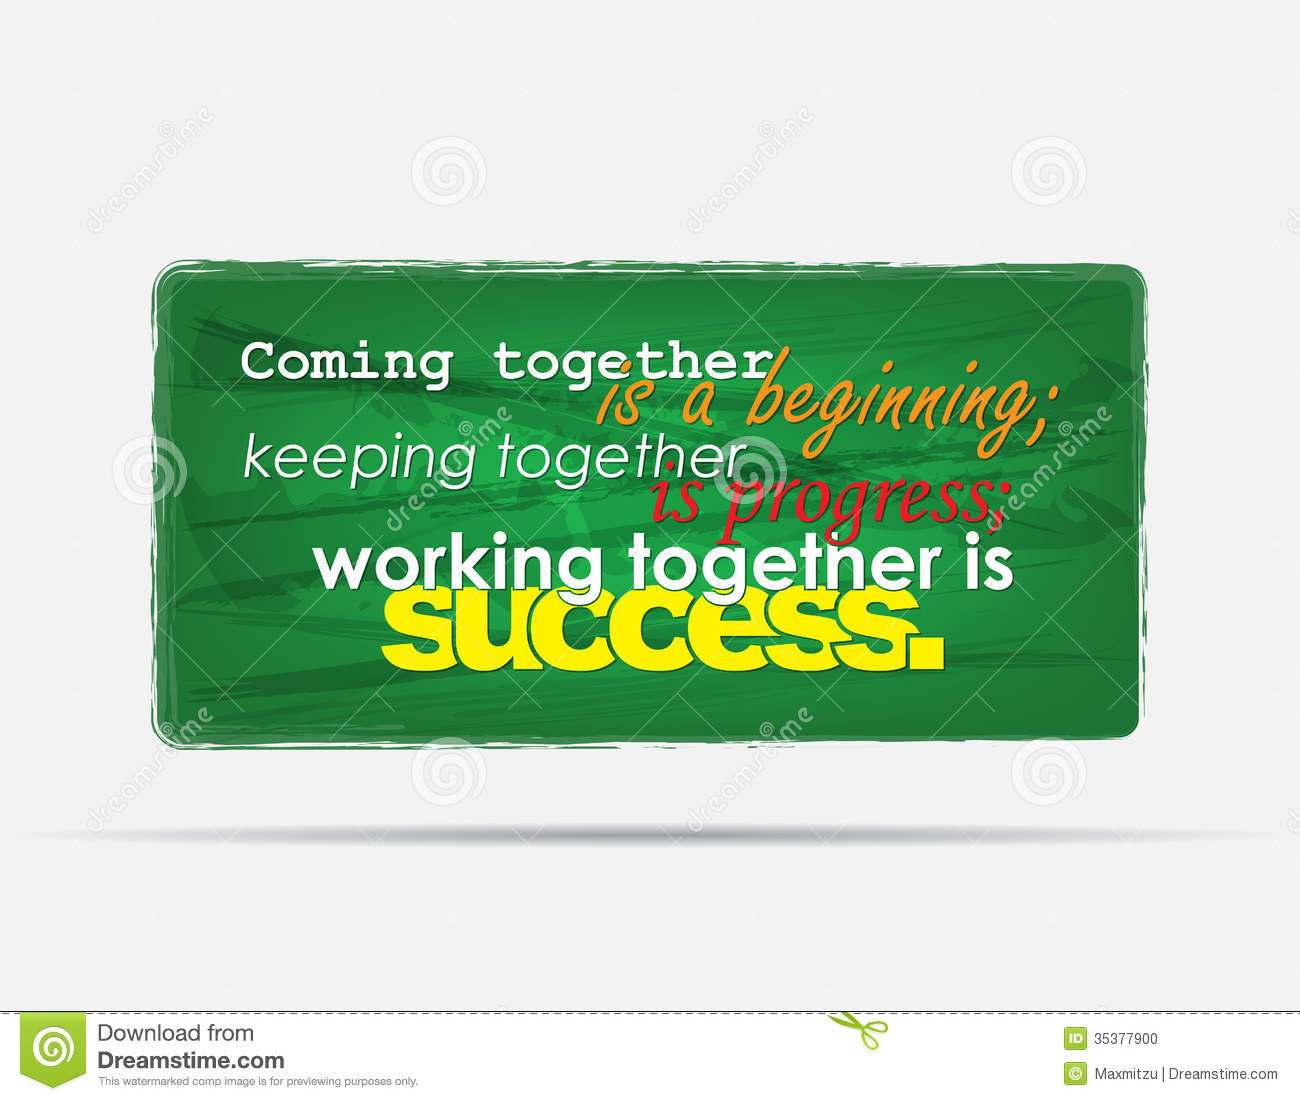  Coming Together Beginning Keeping Togheter Progress Working Together    